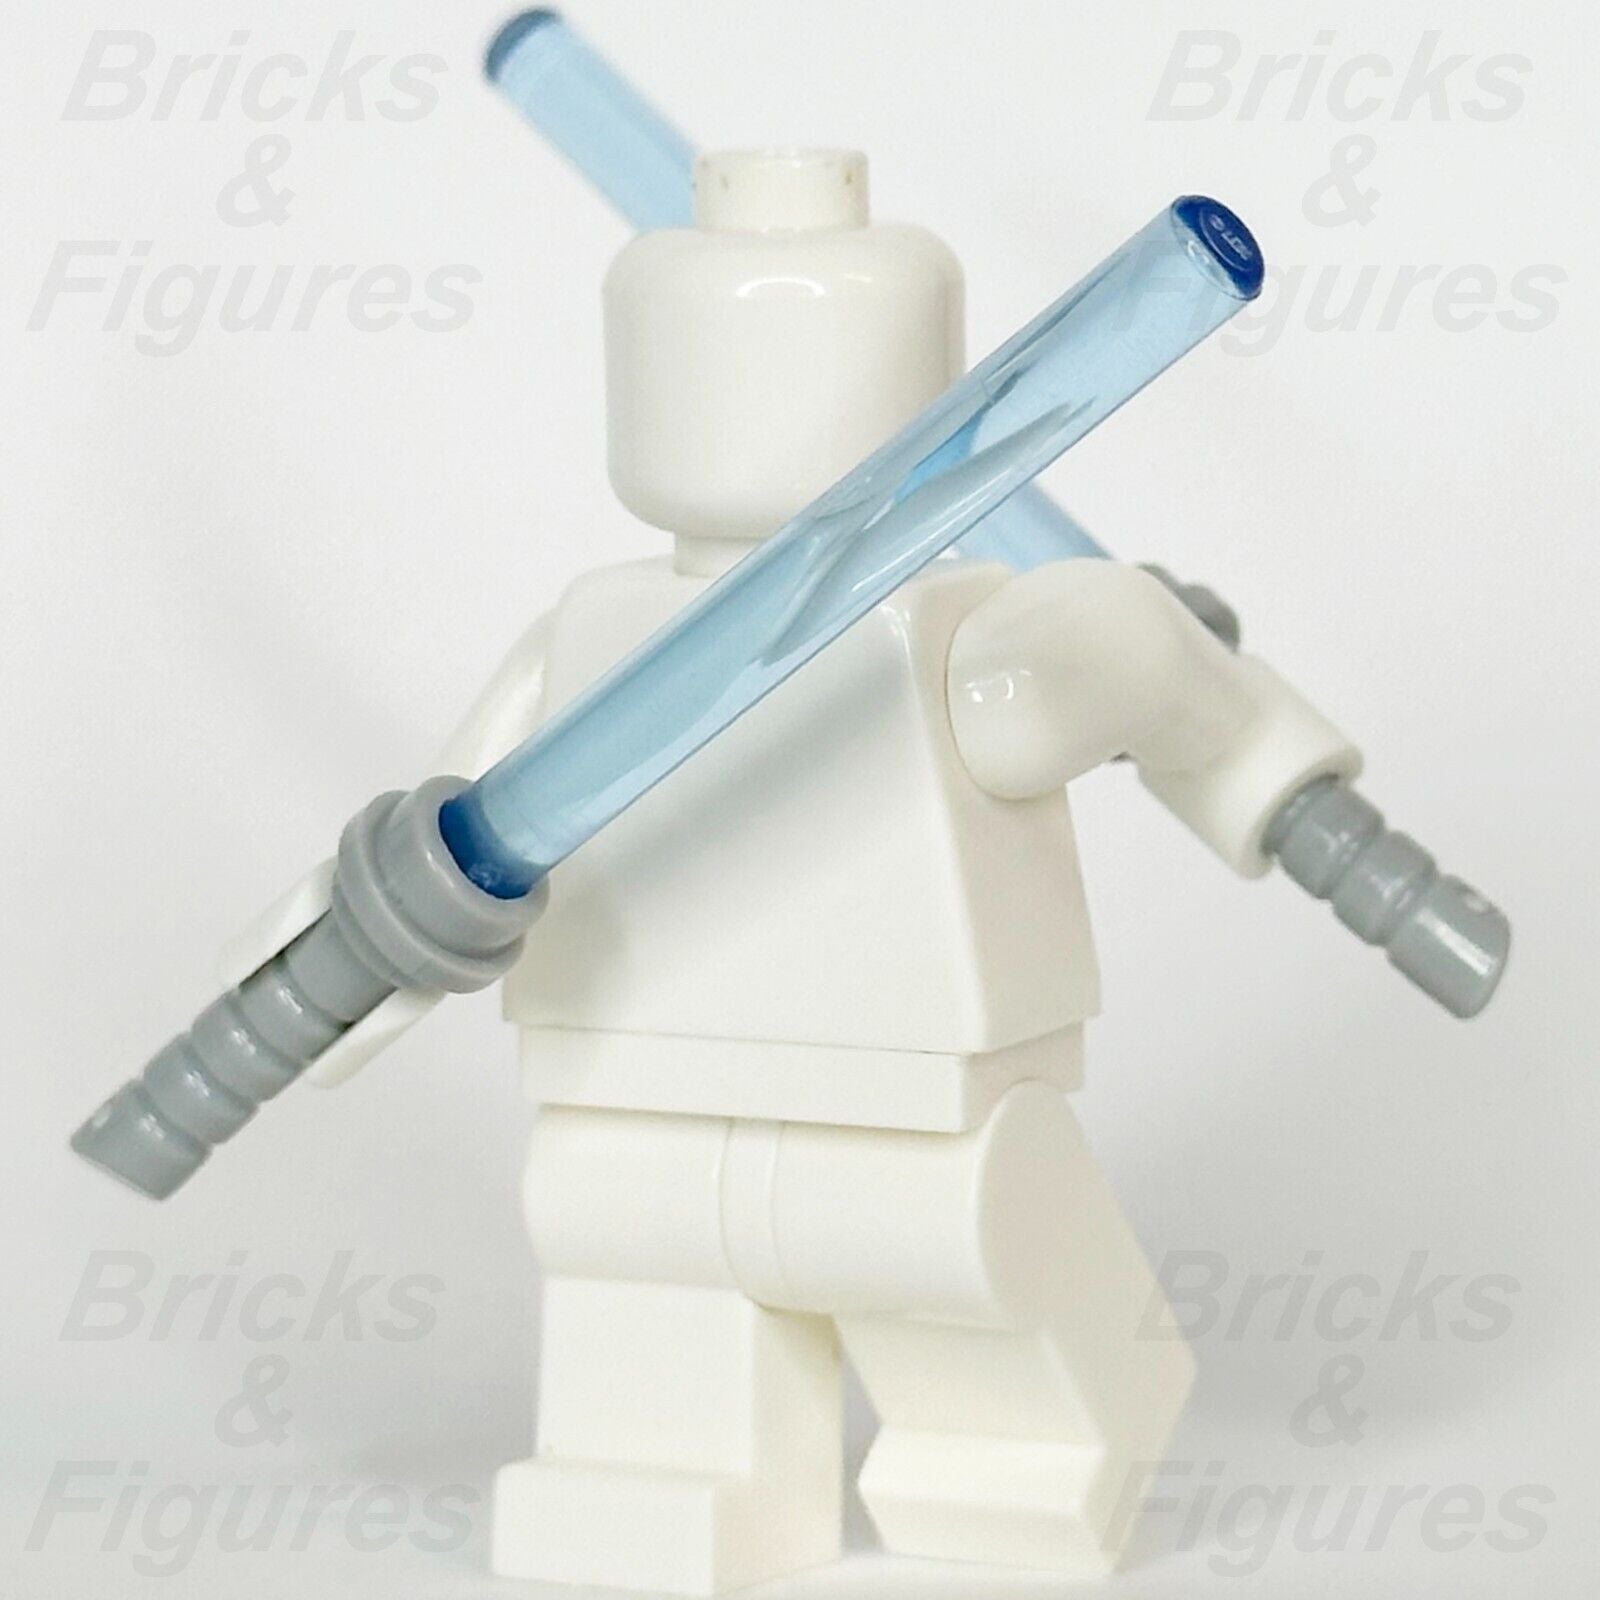 LEGO Star Wars Ahsoka Tano Lightsaber Minifigure Part Curved 75158 61199 x 2